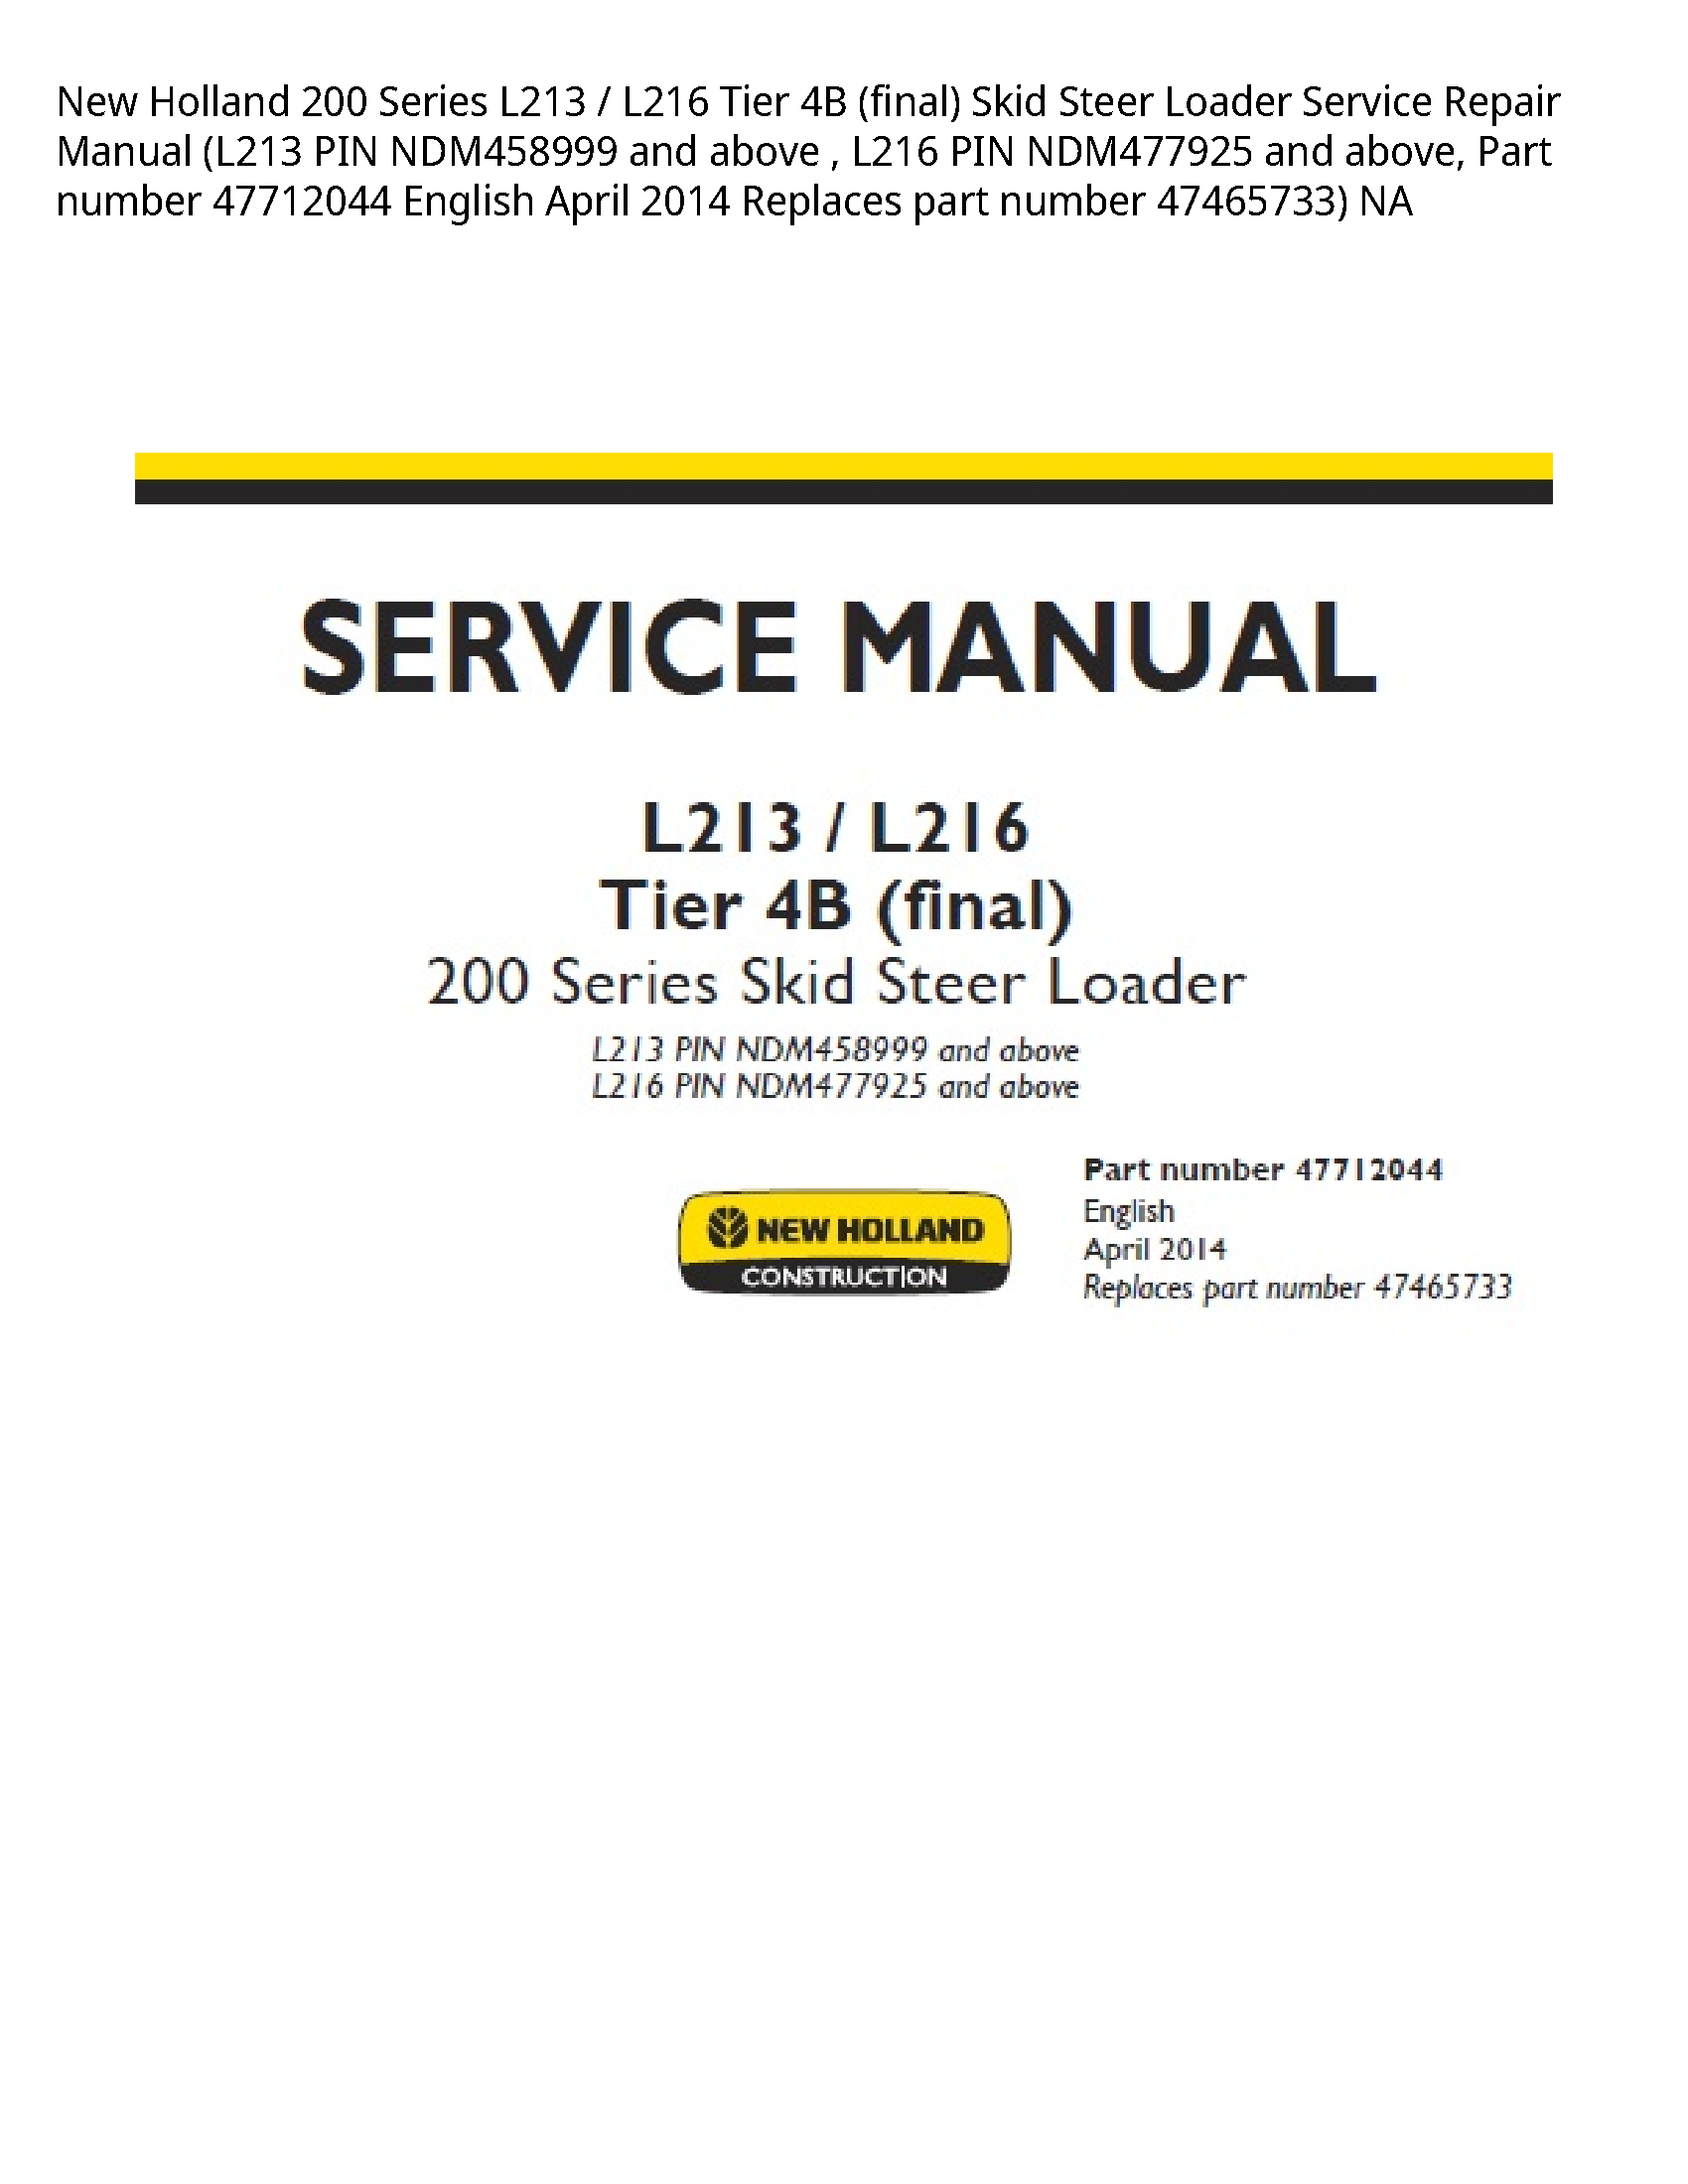 New Holland 200 Series Tier (final) Skid Steer Loader manual